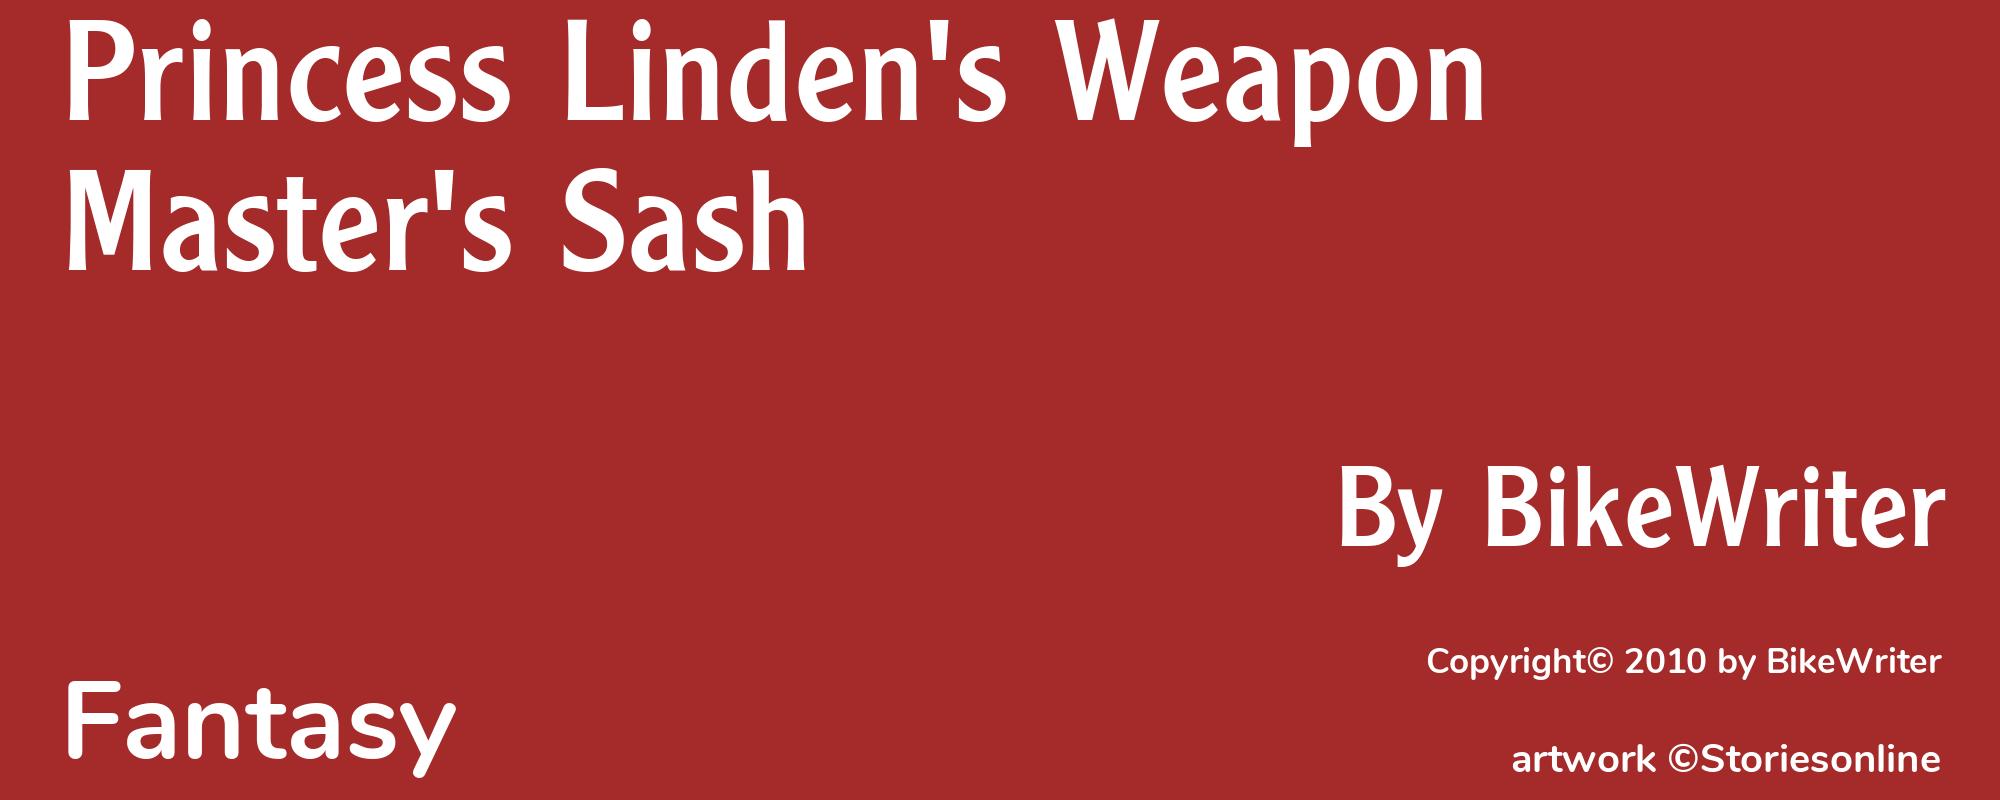 Princess Linden's Weapon Master's Sash - Cover